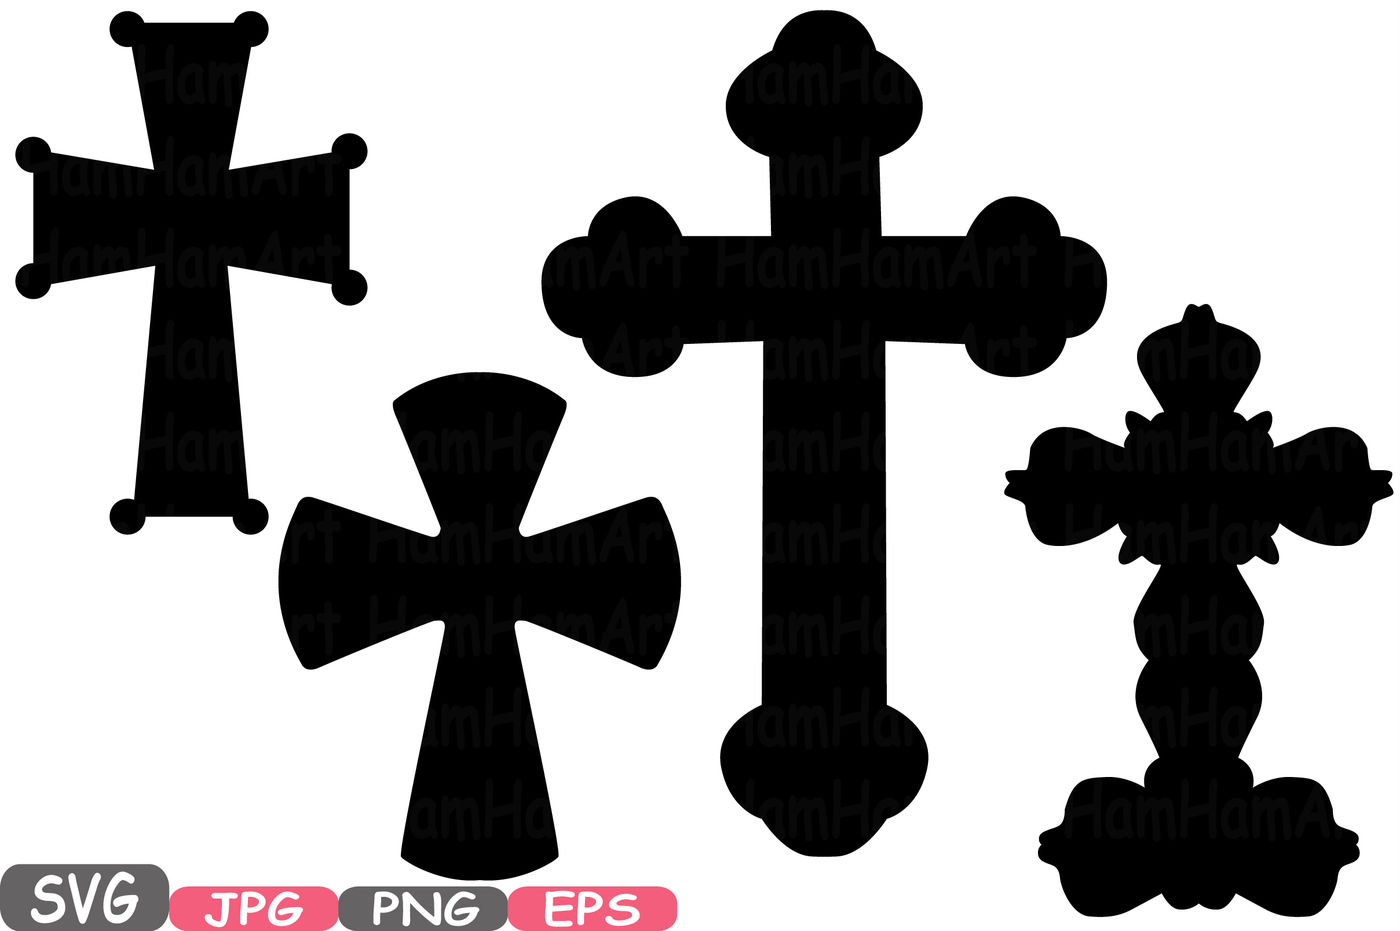 Download Christian Cross Svg Silhouette Cutting Files Jesus Cross Religious Monogram Clipart Cricut Bible Sign Icons God Design Cameo Vinyl 512s By Hamhamart Thehungryjpeg Com